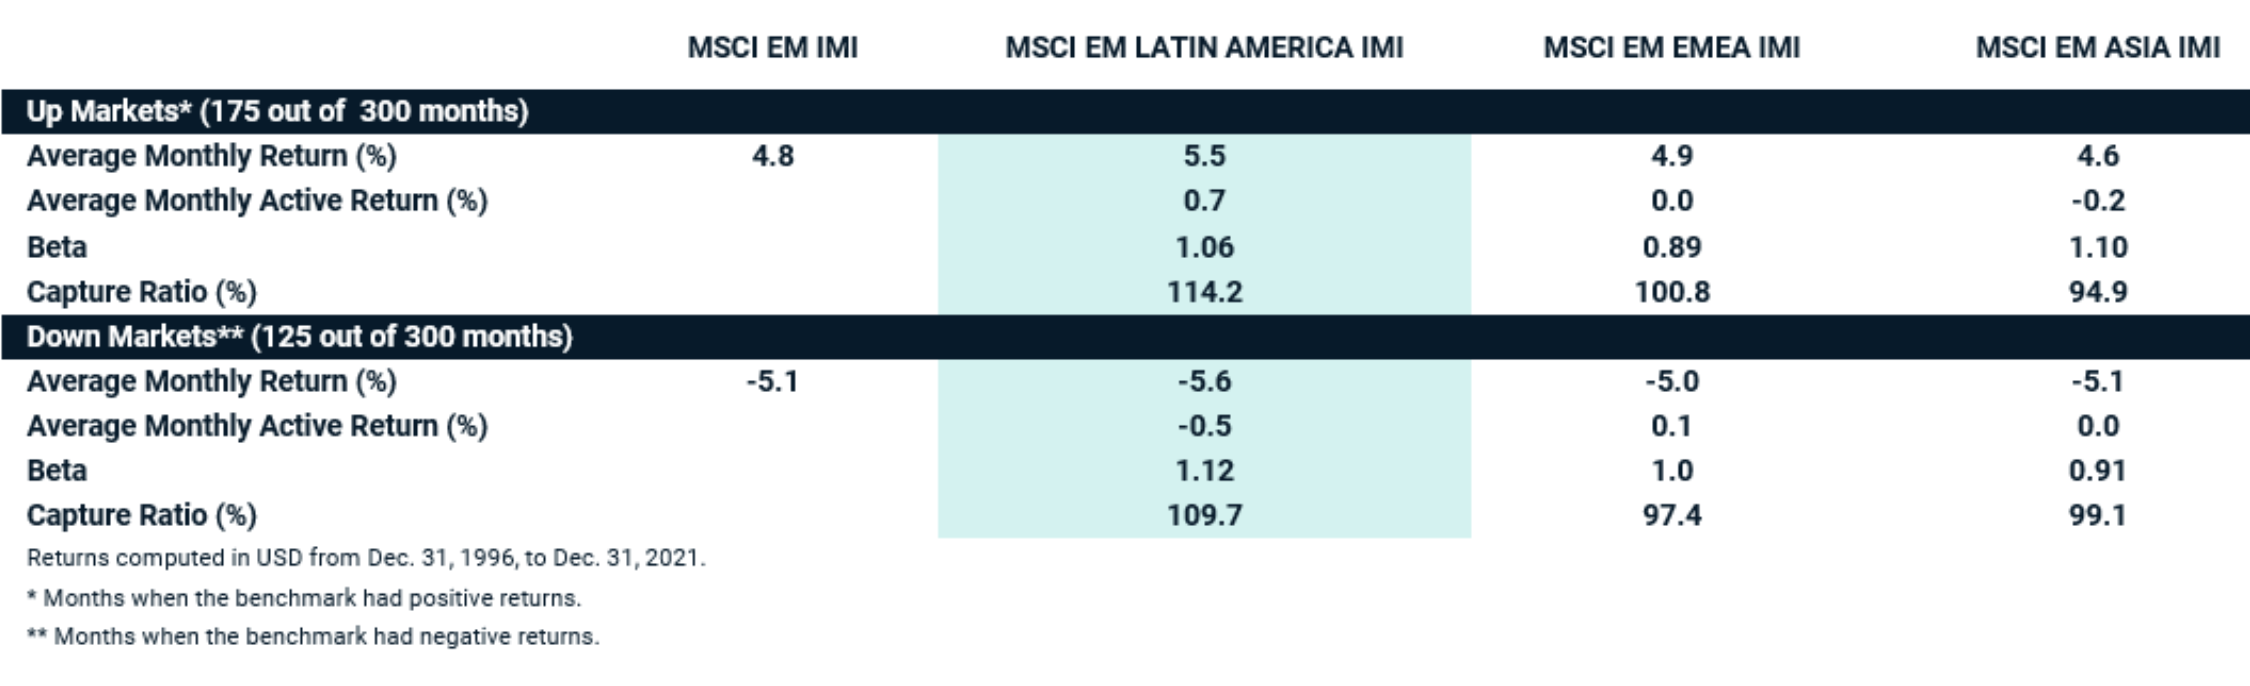 EM Latin America sector weights